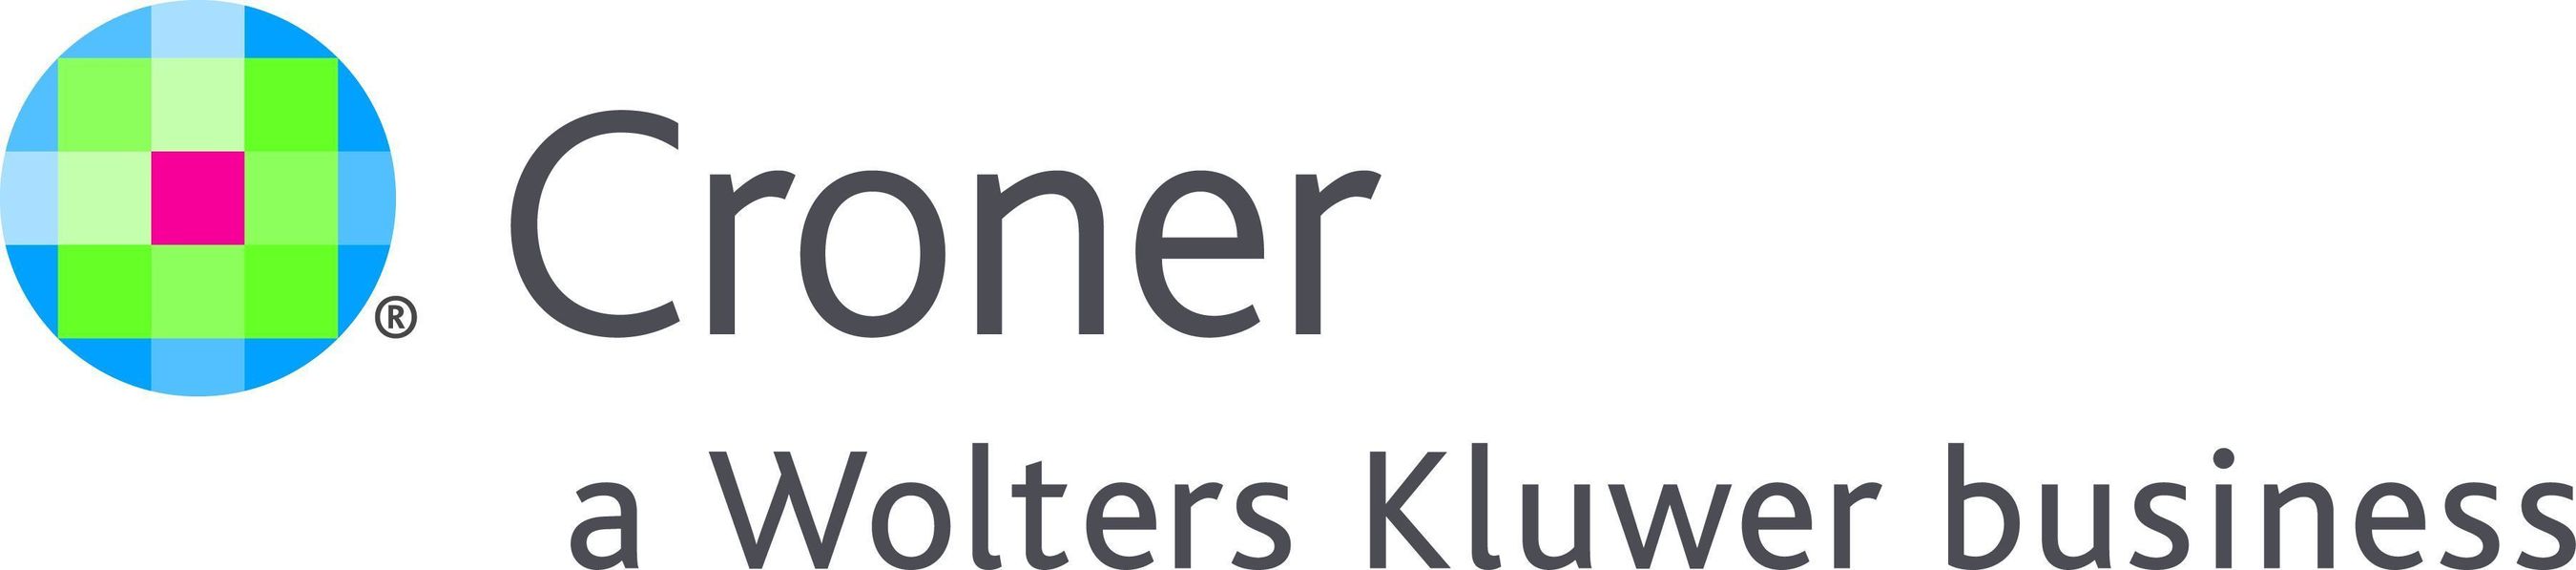 Croner Logo (PRNewsFoto/Croner)